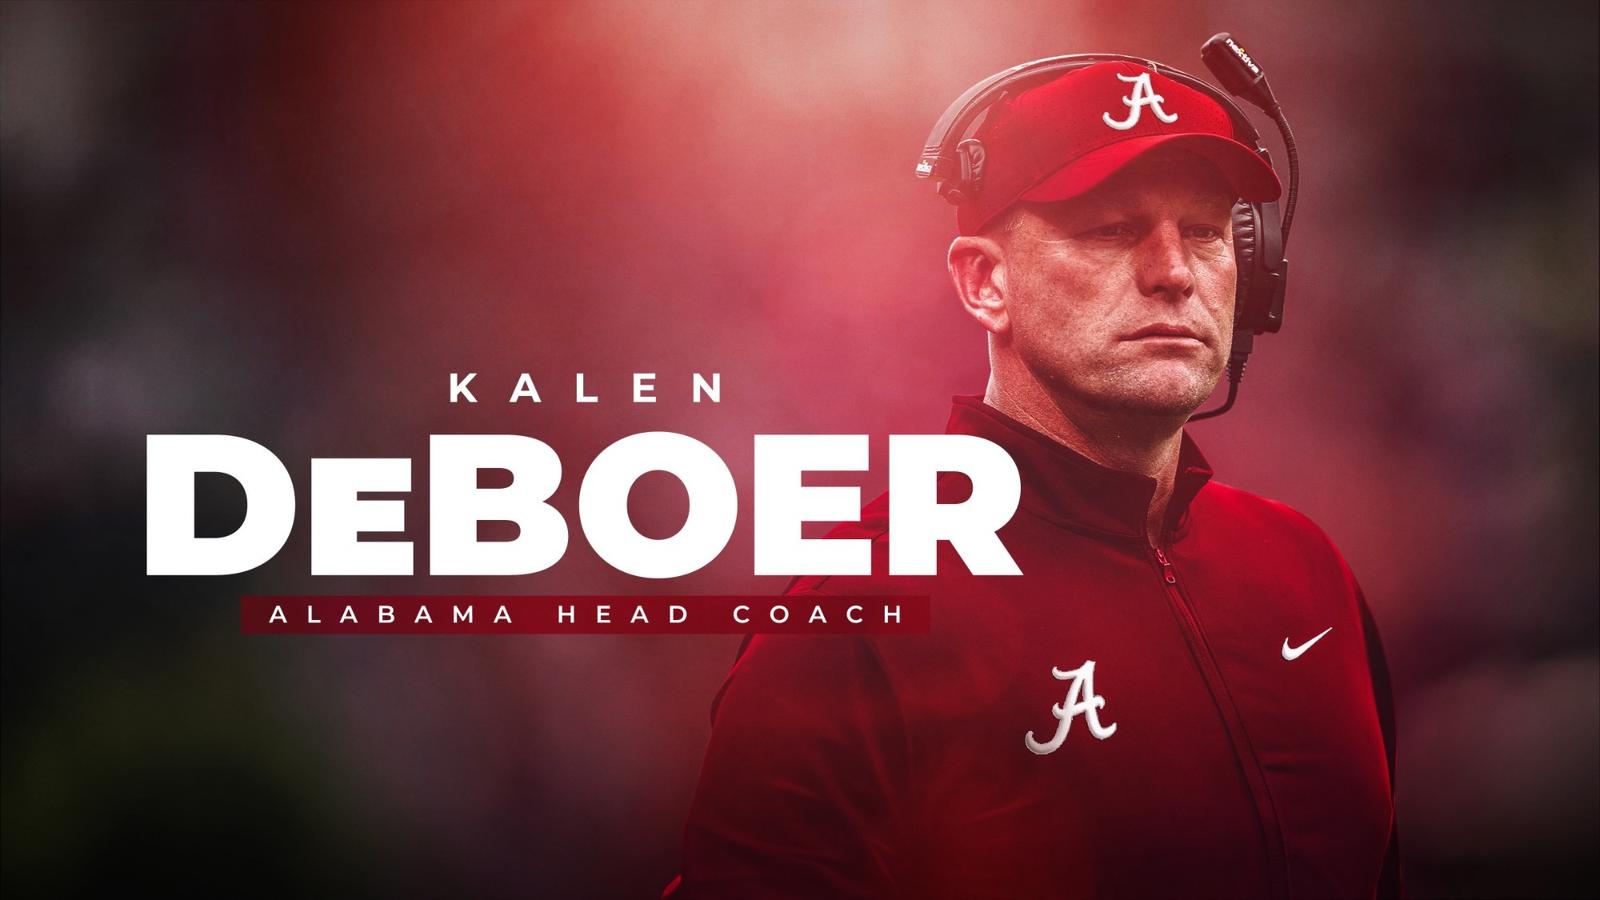 Kalen DeBoer Named Head Coach of Alabama Football - Alabama Athletics